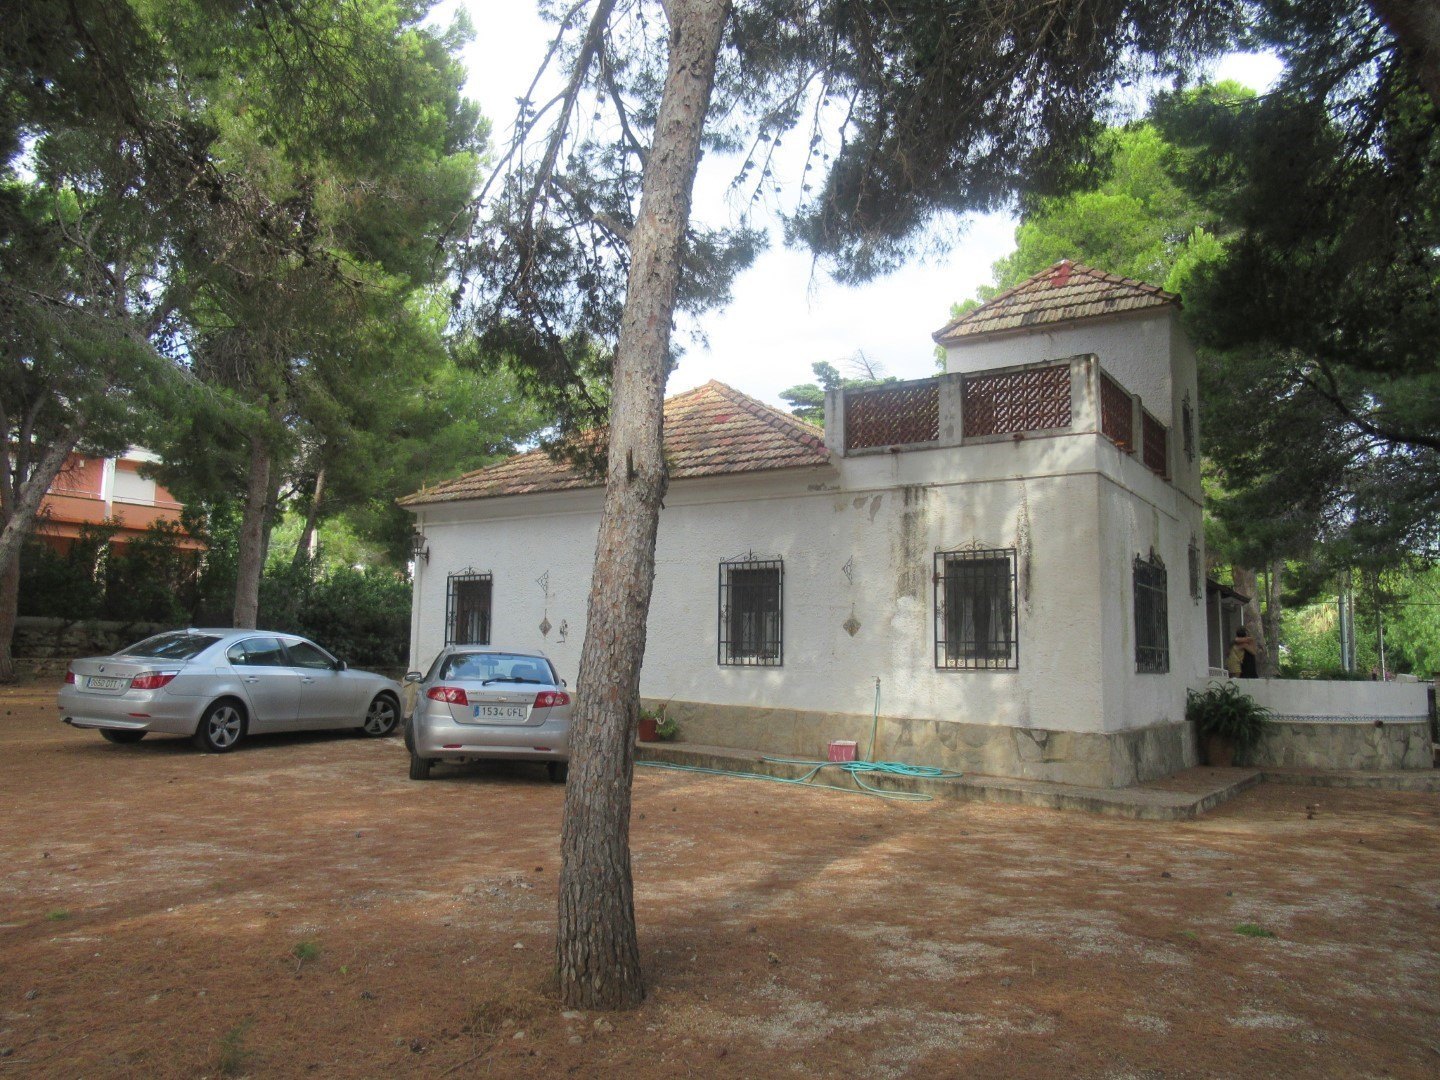 Villas in DENIA Villa for sale in Las Rotas Denia with large plot of land